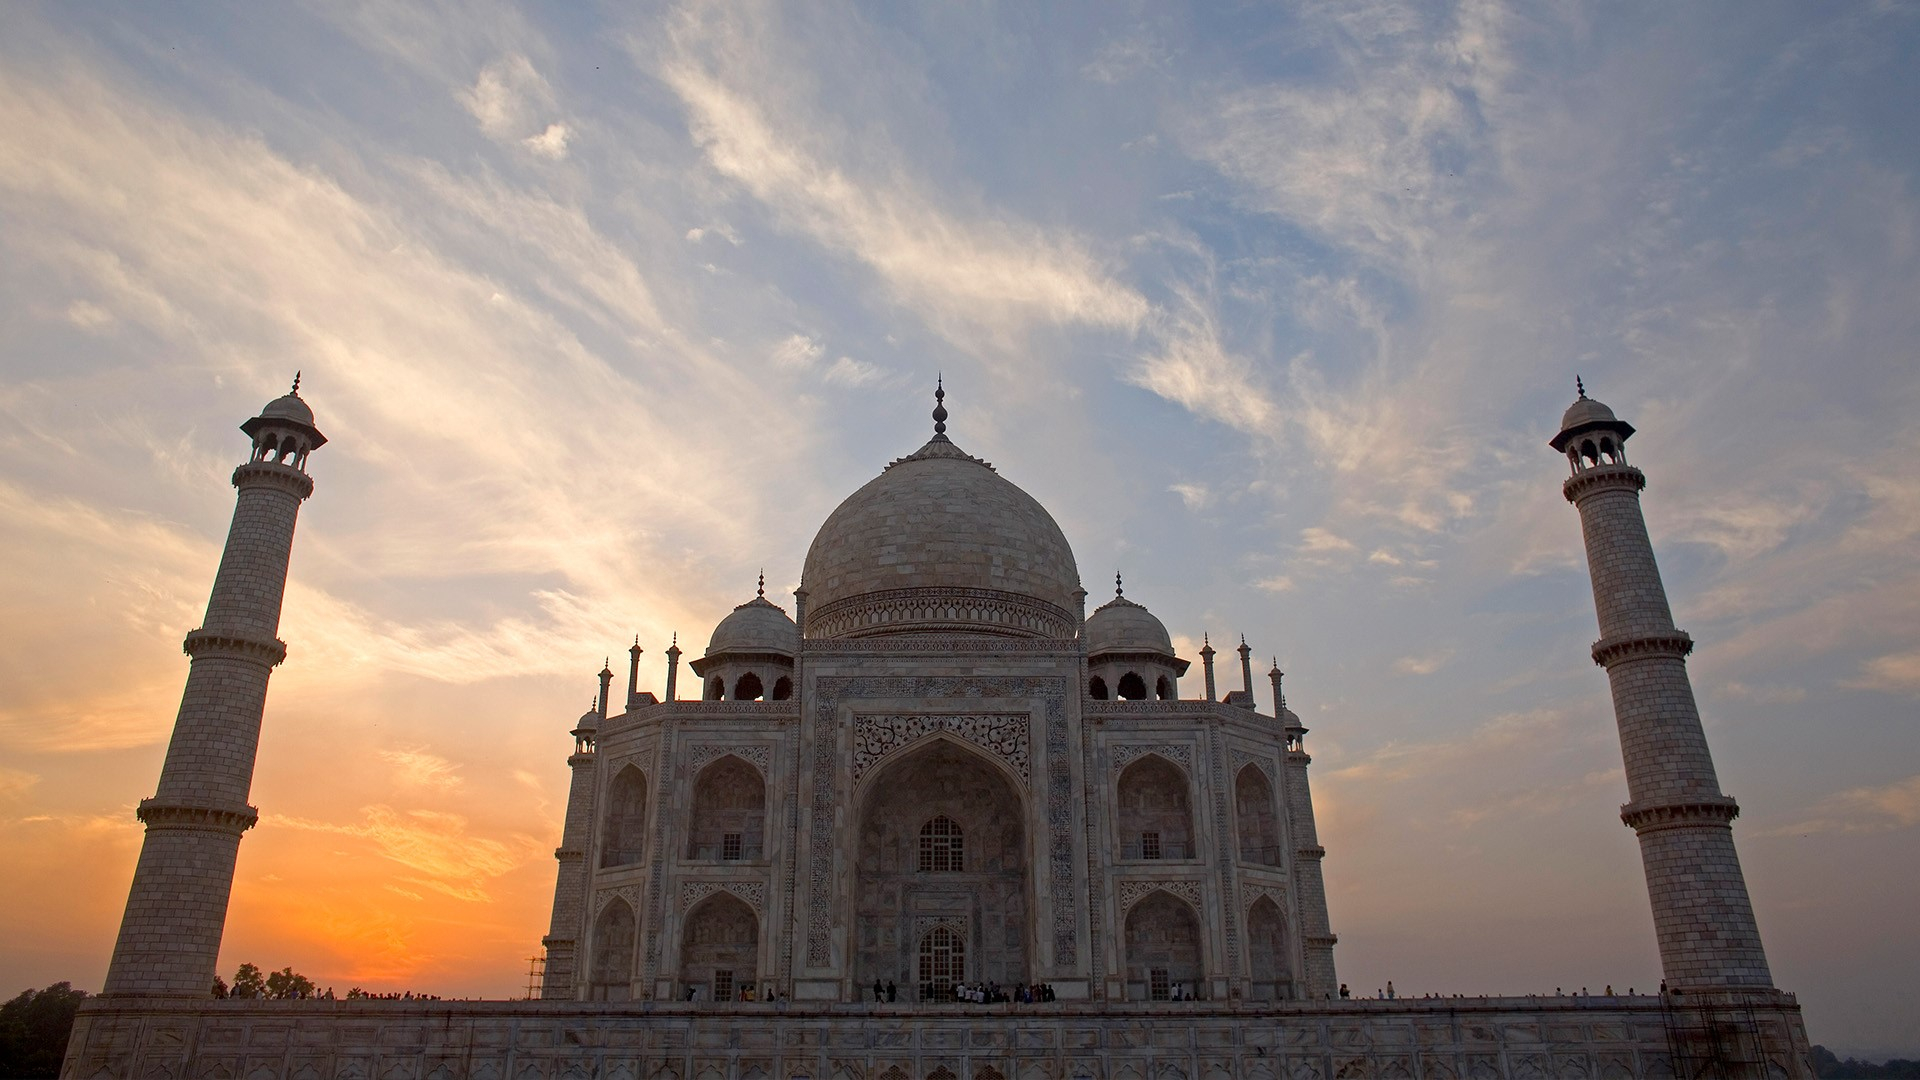 1920x1080 Taj Mahal with sunset behind it, Agra, Uttar Pradesh, India | Windows 10 Spotlight Images